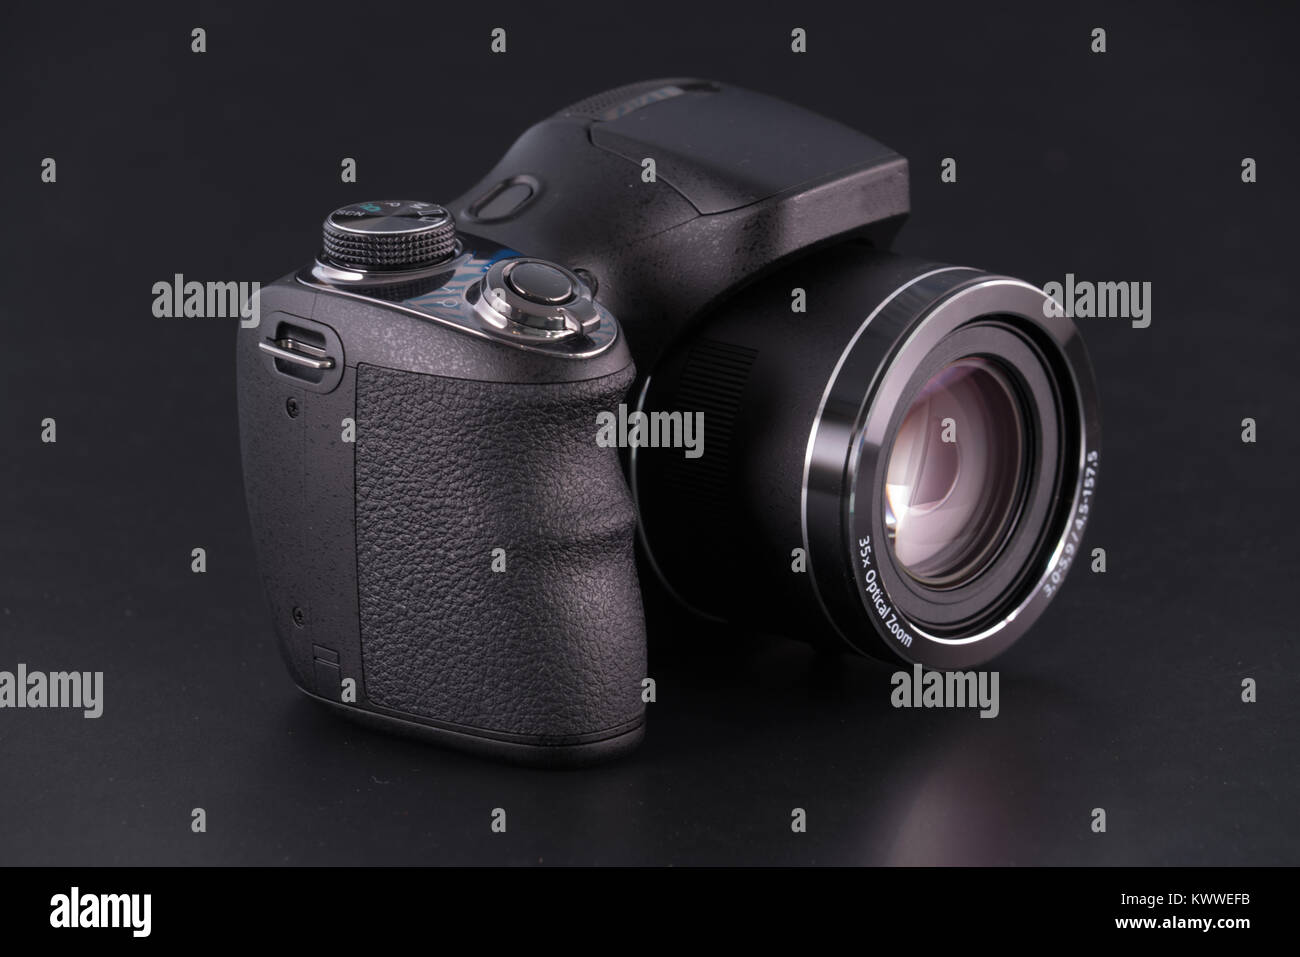 Digitale spiegellosen Foto Kamera mit Zoomobjektiv Stockfoto